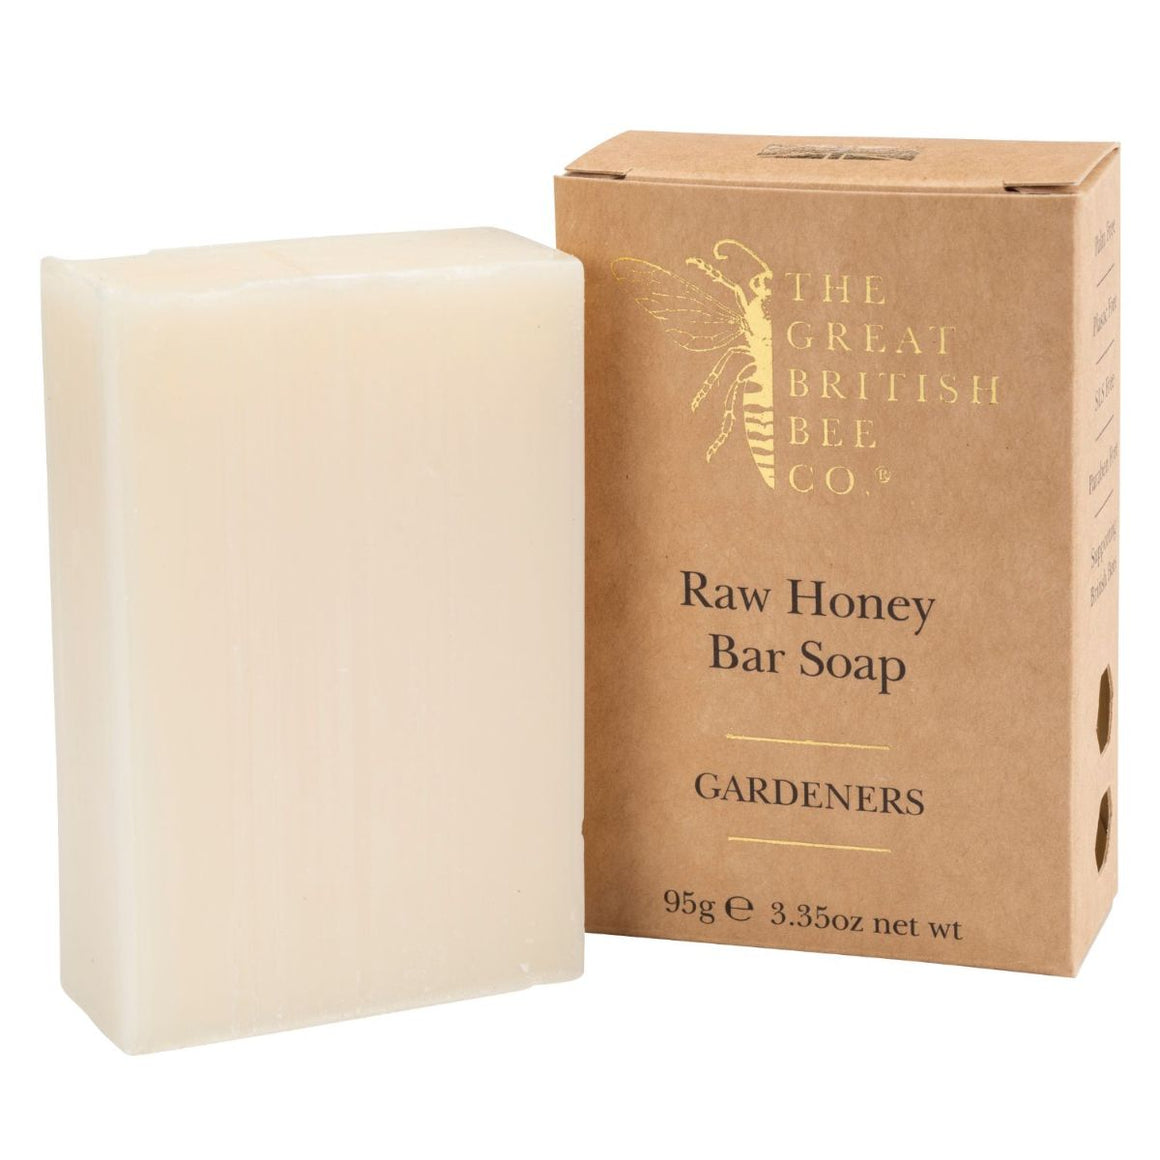 Raw Honey Bar Soap 95g - Gardeners